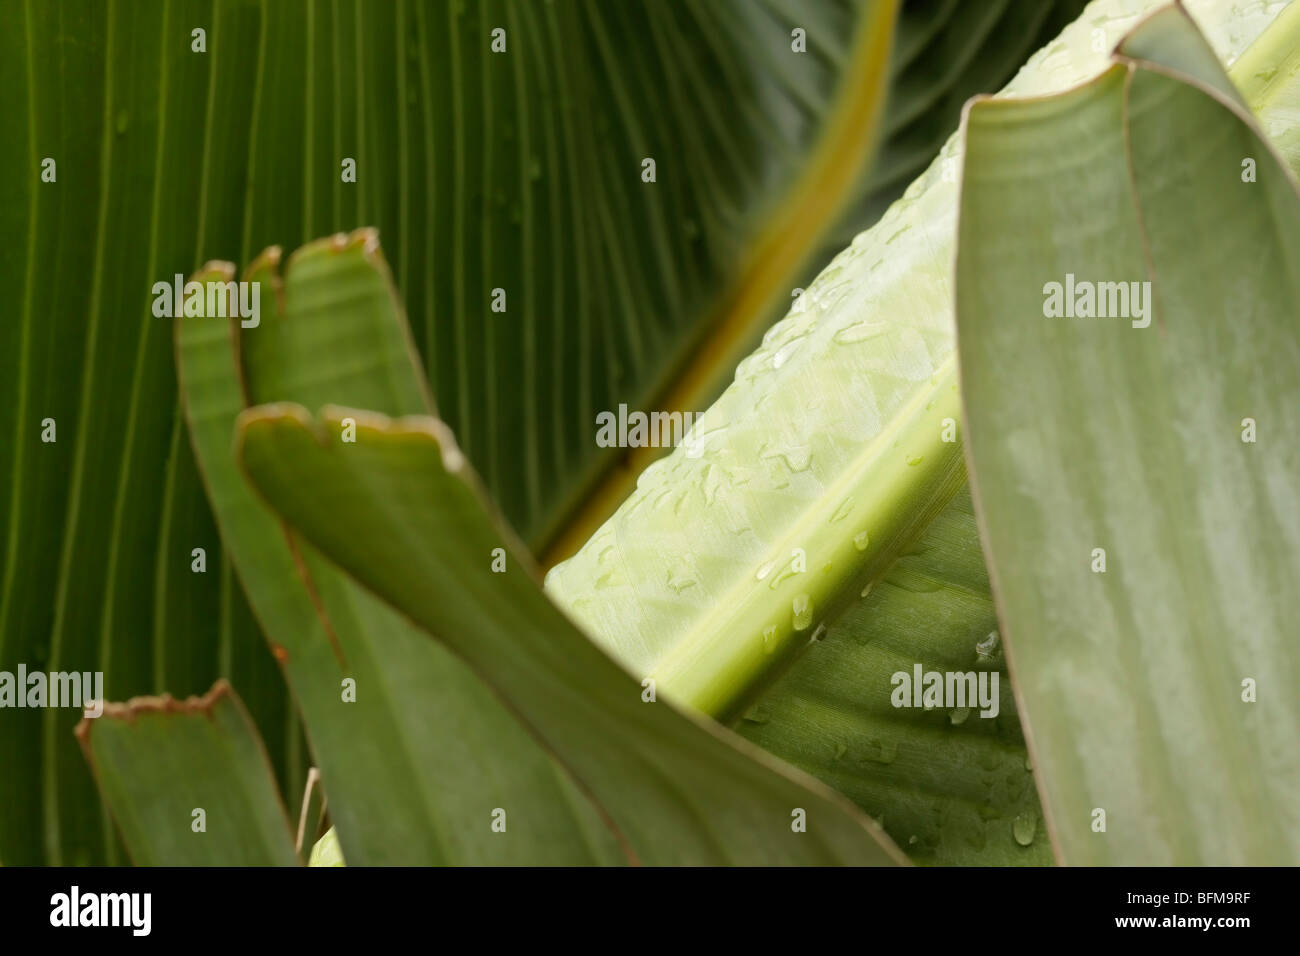 Giant Strelitzia (wild banana) leaves in sharp detail Stock Photo